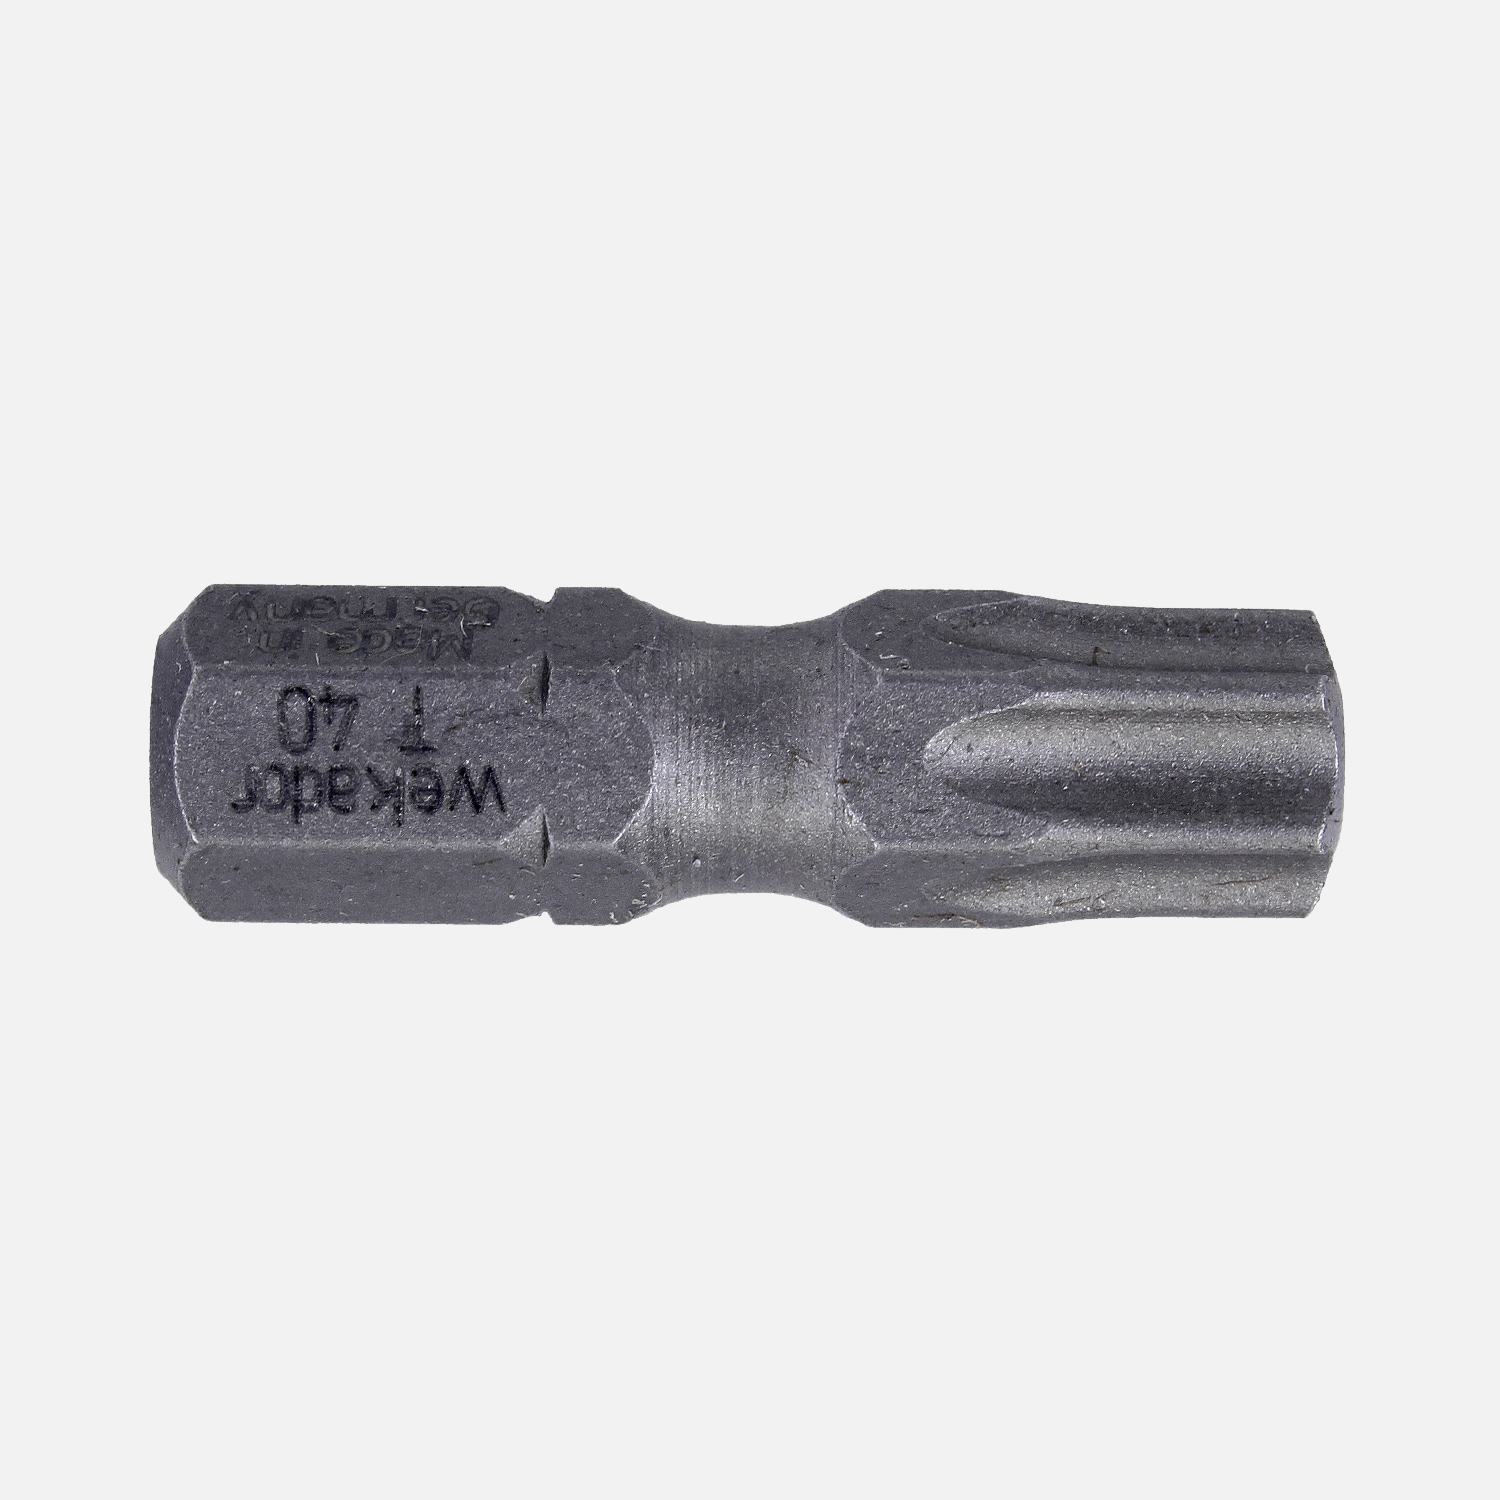 10 Torx Bits TX40 - 25mm Länge - 1/4" Antrieb - Industriequalität